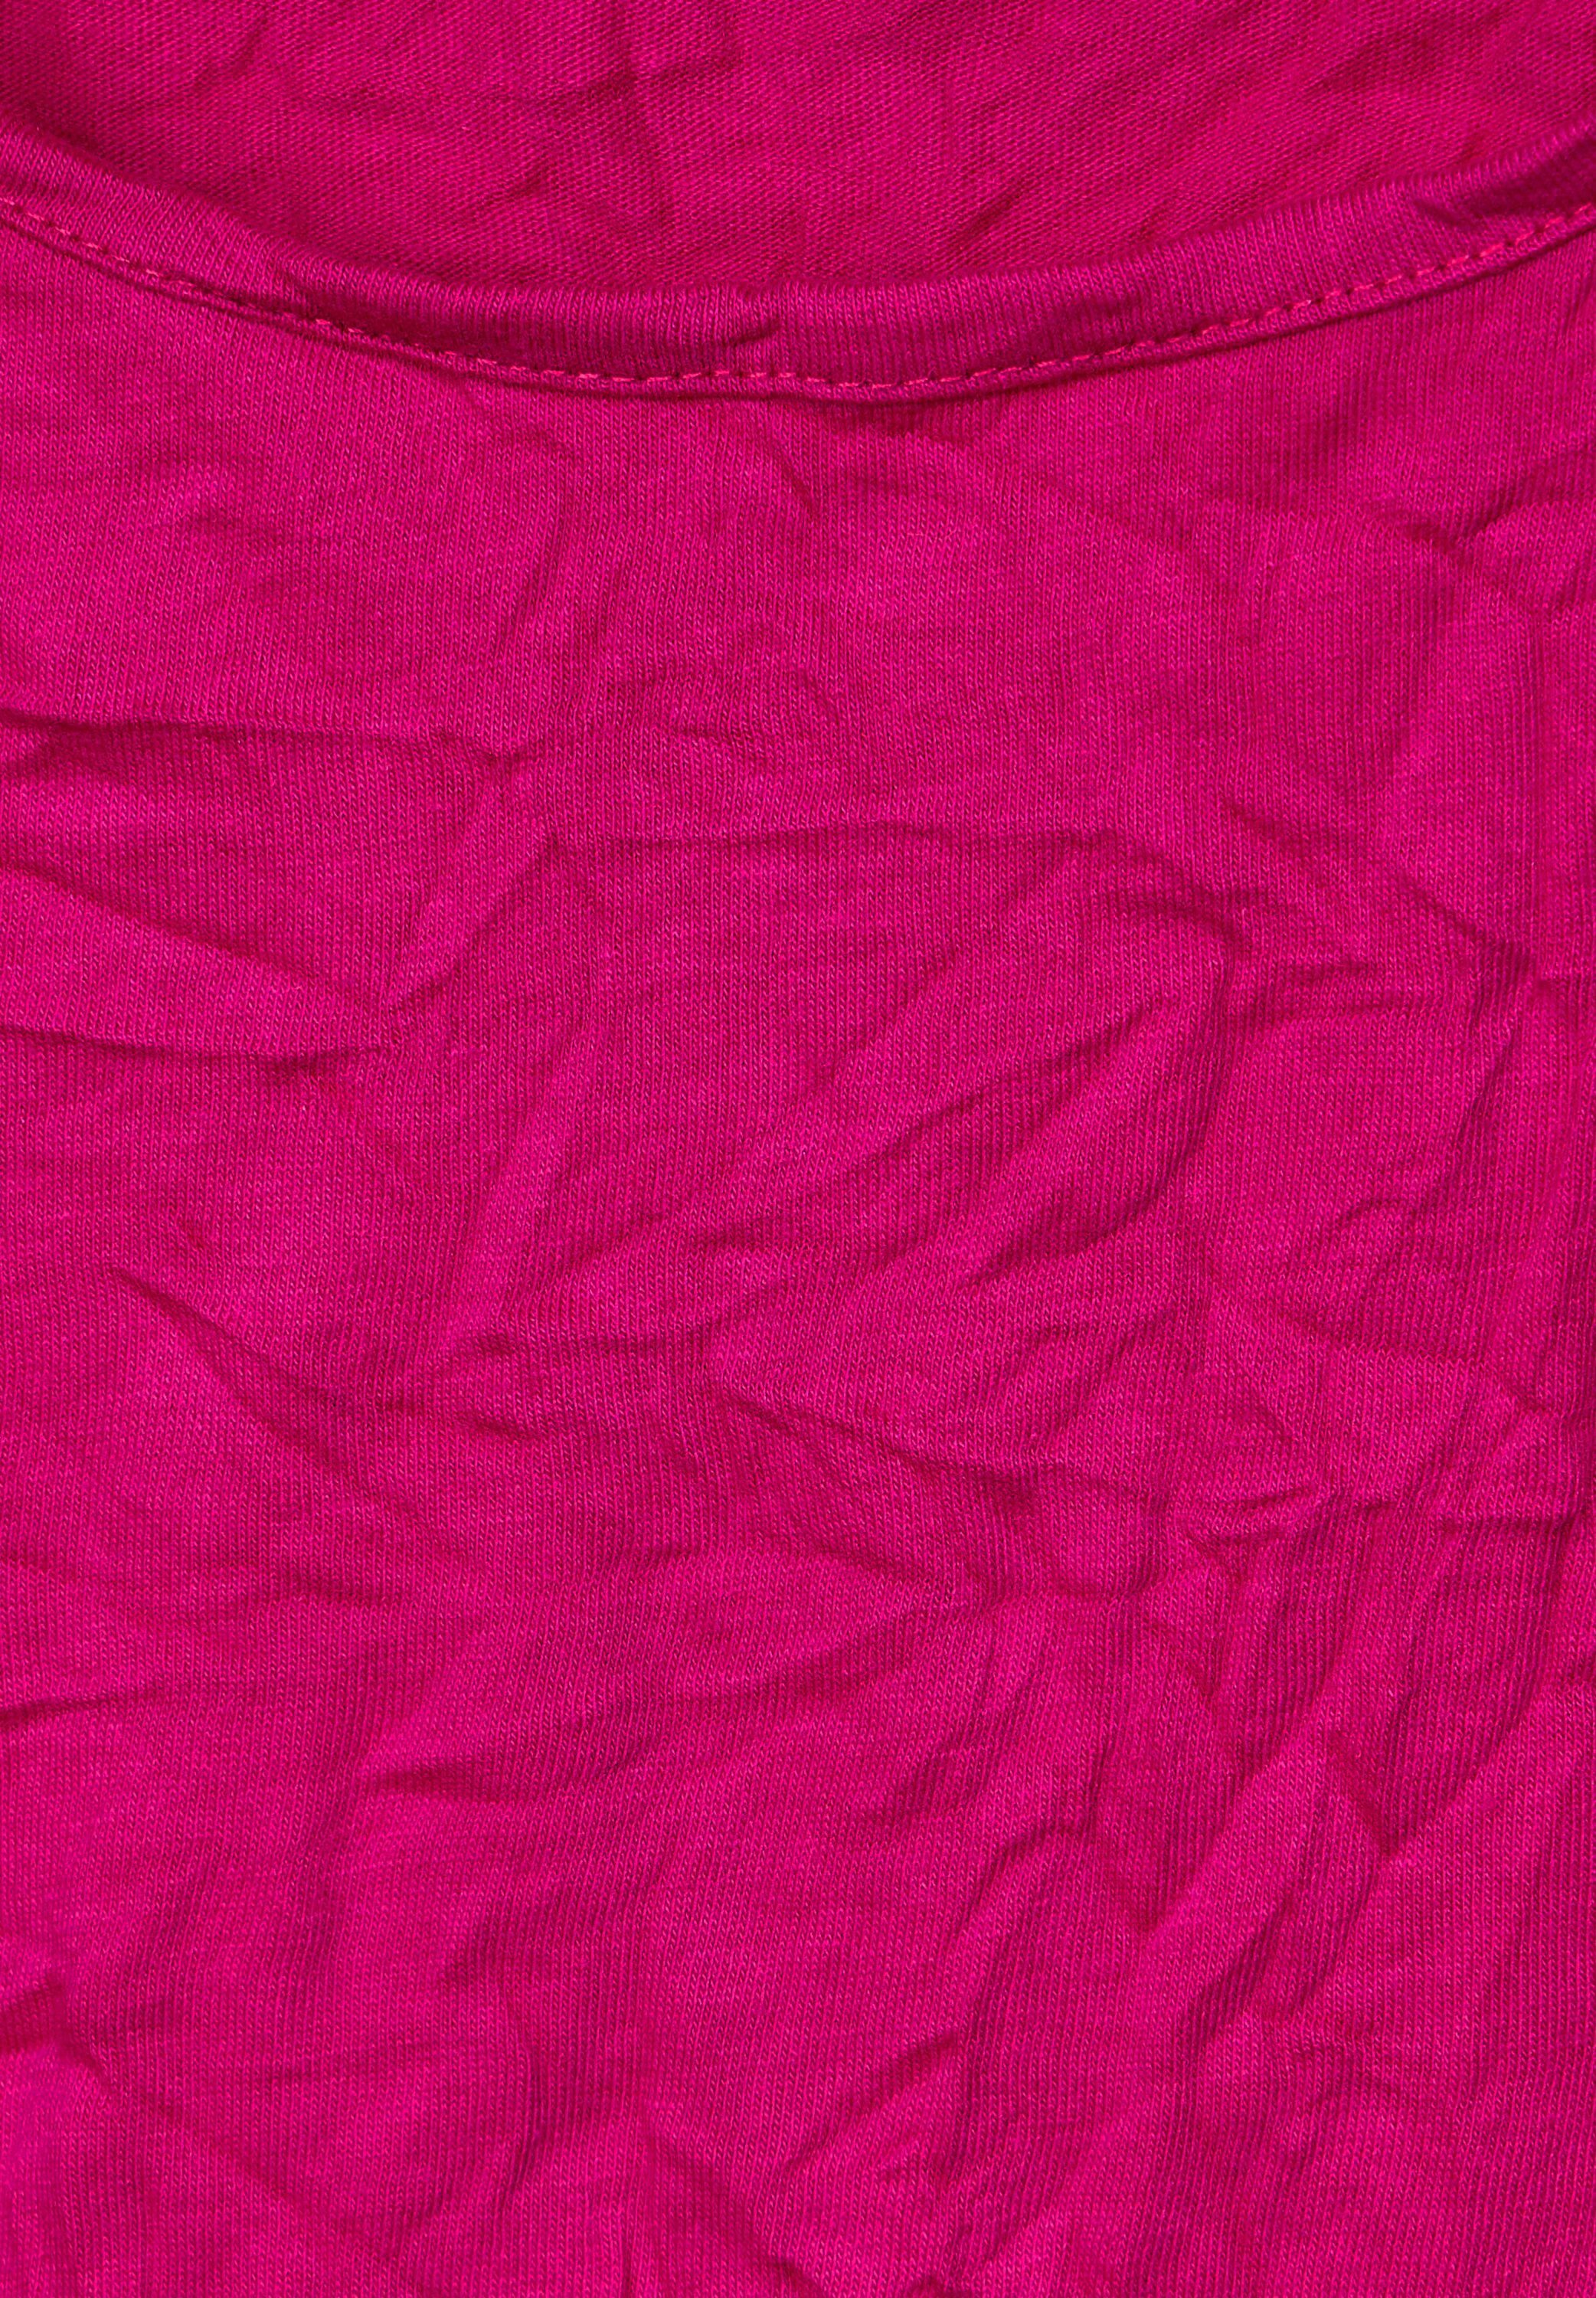 ONE aus pink nu STREET Rundhalsshirt Materialmix softem